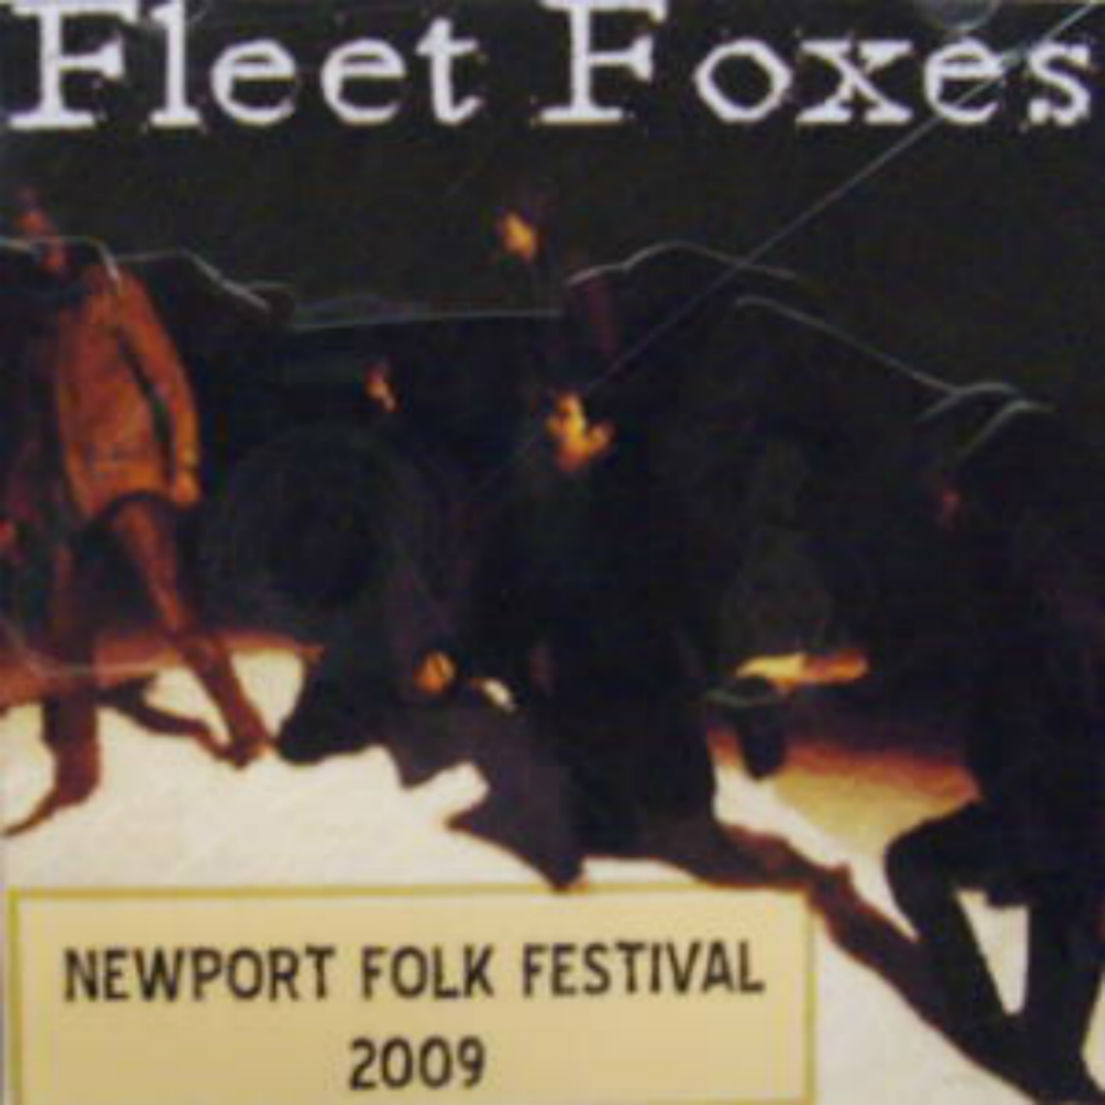 Fleet Foxes / Newport Folk Festival 2009